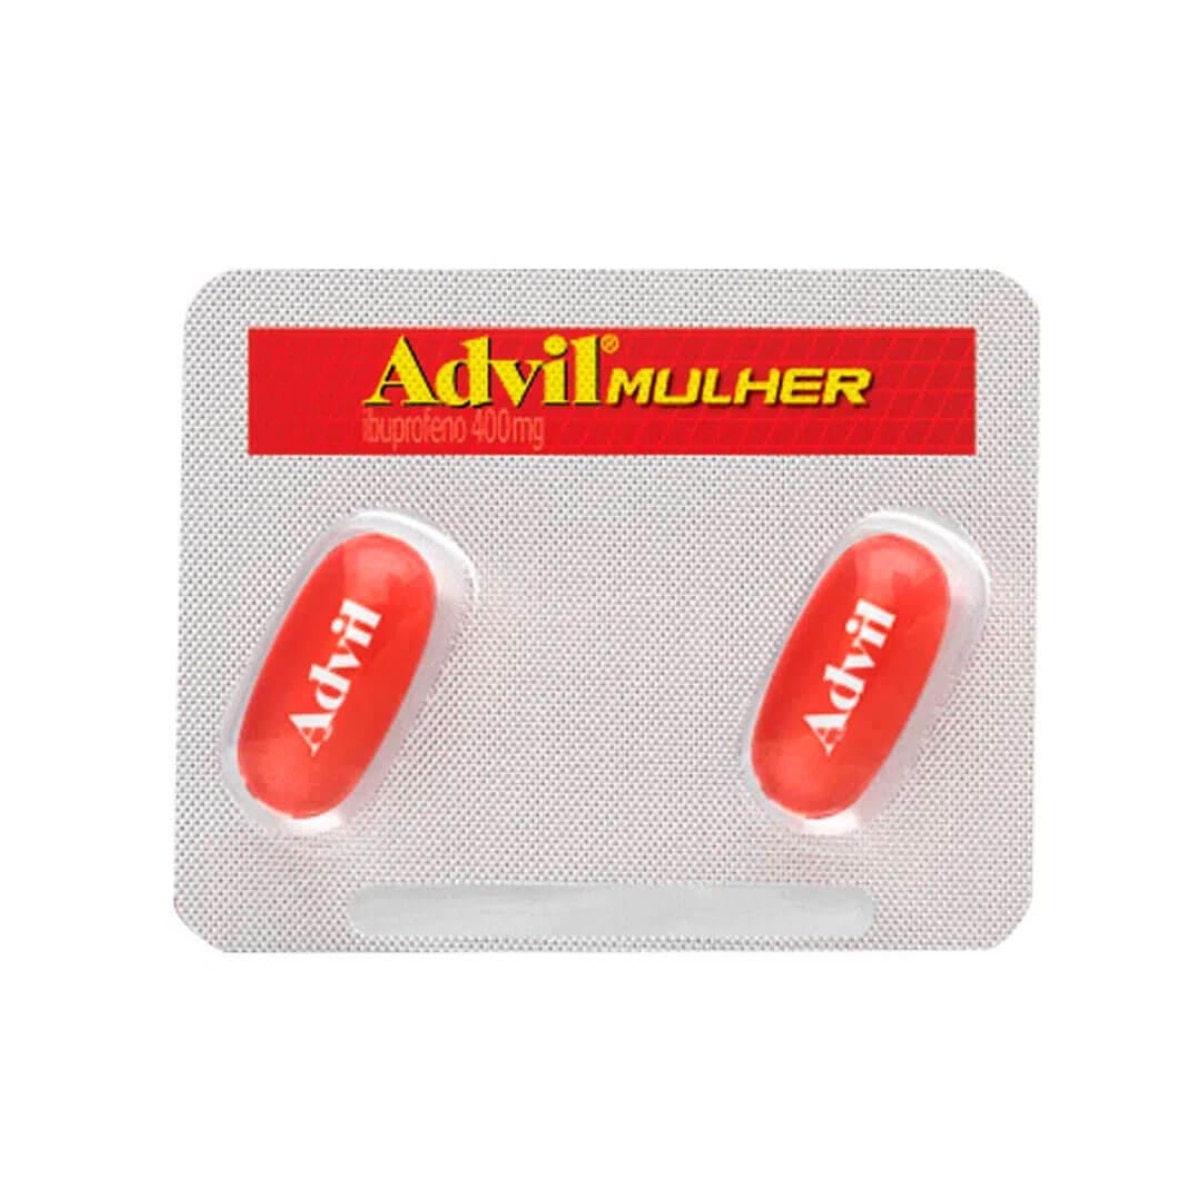 Advil Mulher 400mg 2 Capsulas